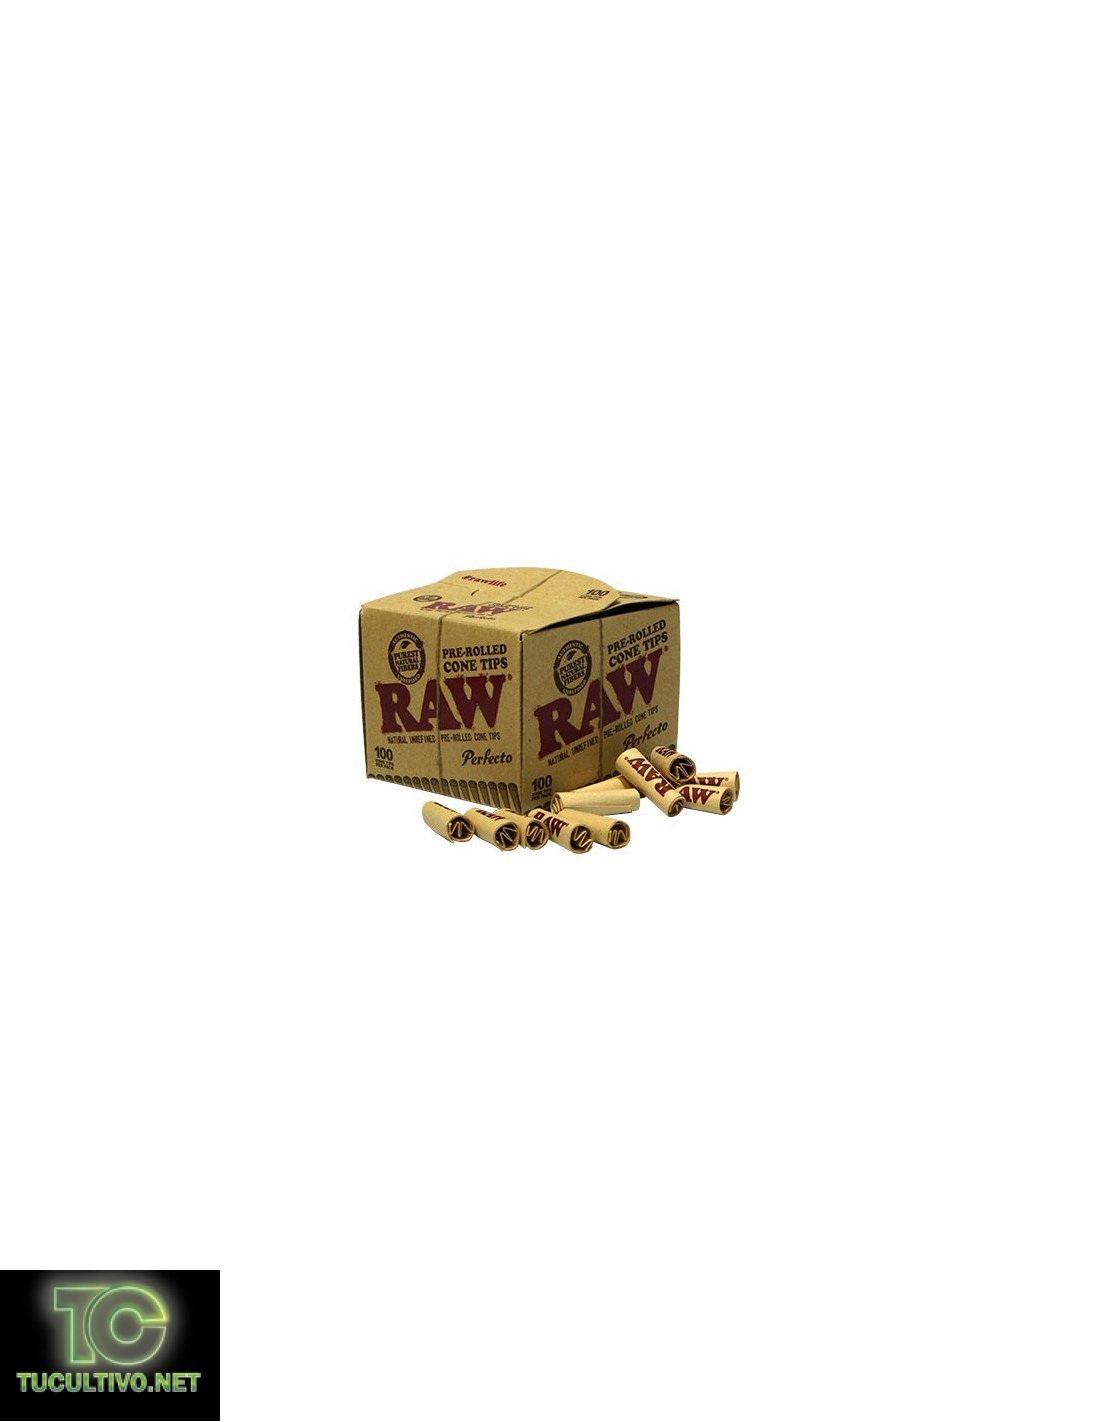 acheter filtre raw pre rolled, Filtre en carton - toncar